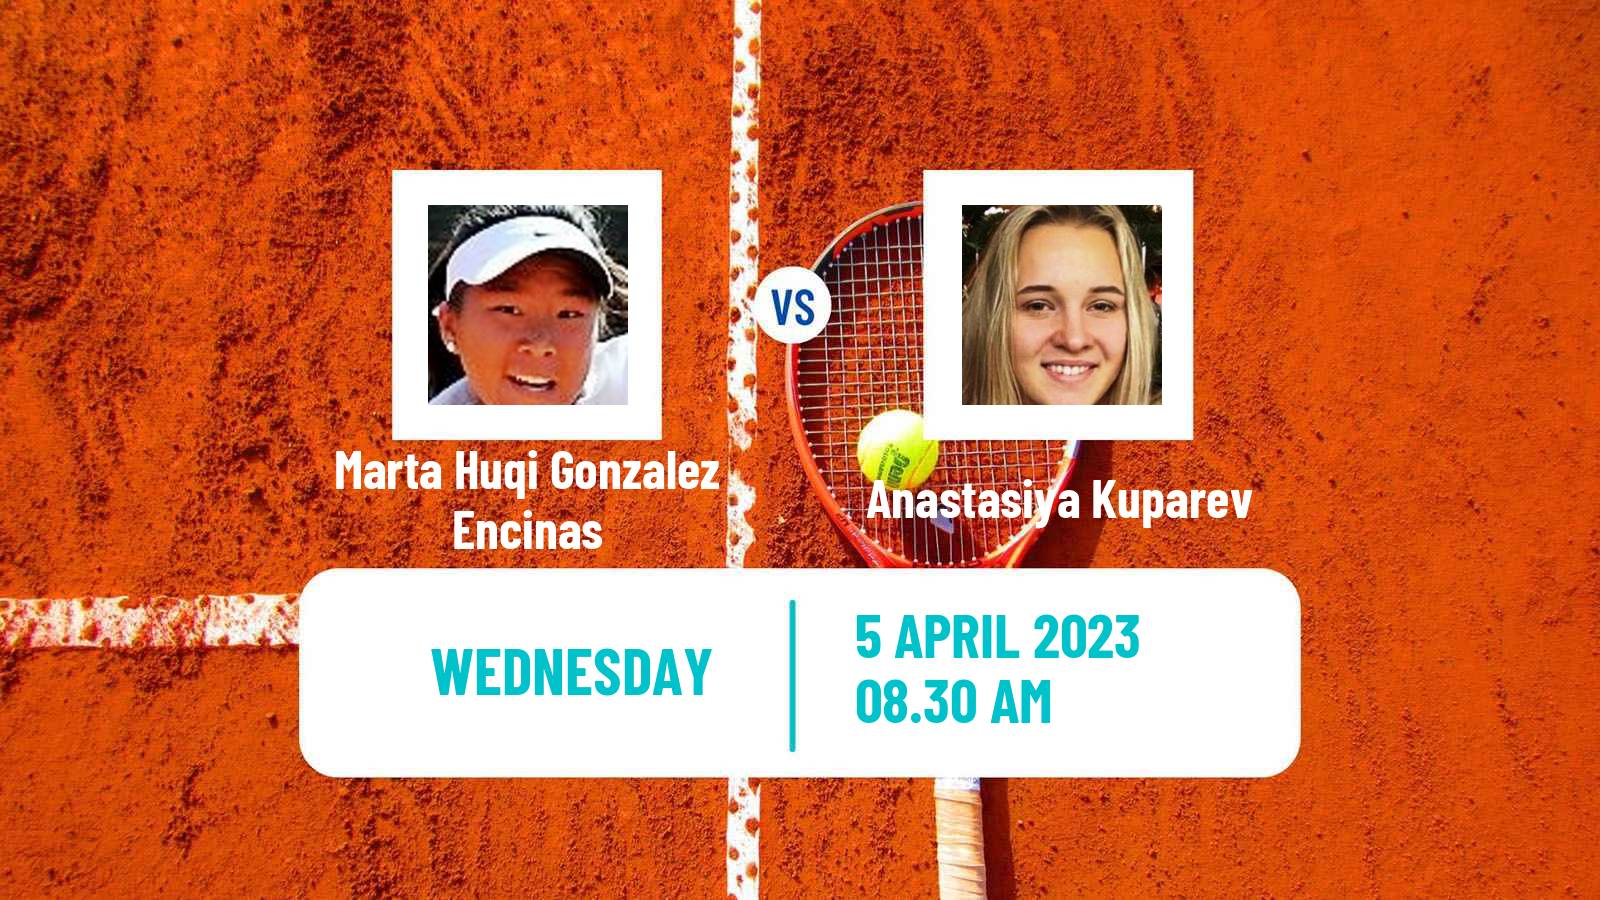 Tennis ITF Tournaments Marta Huqi Gonzalez Encinas - Anastasiya Kuparev